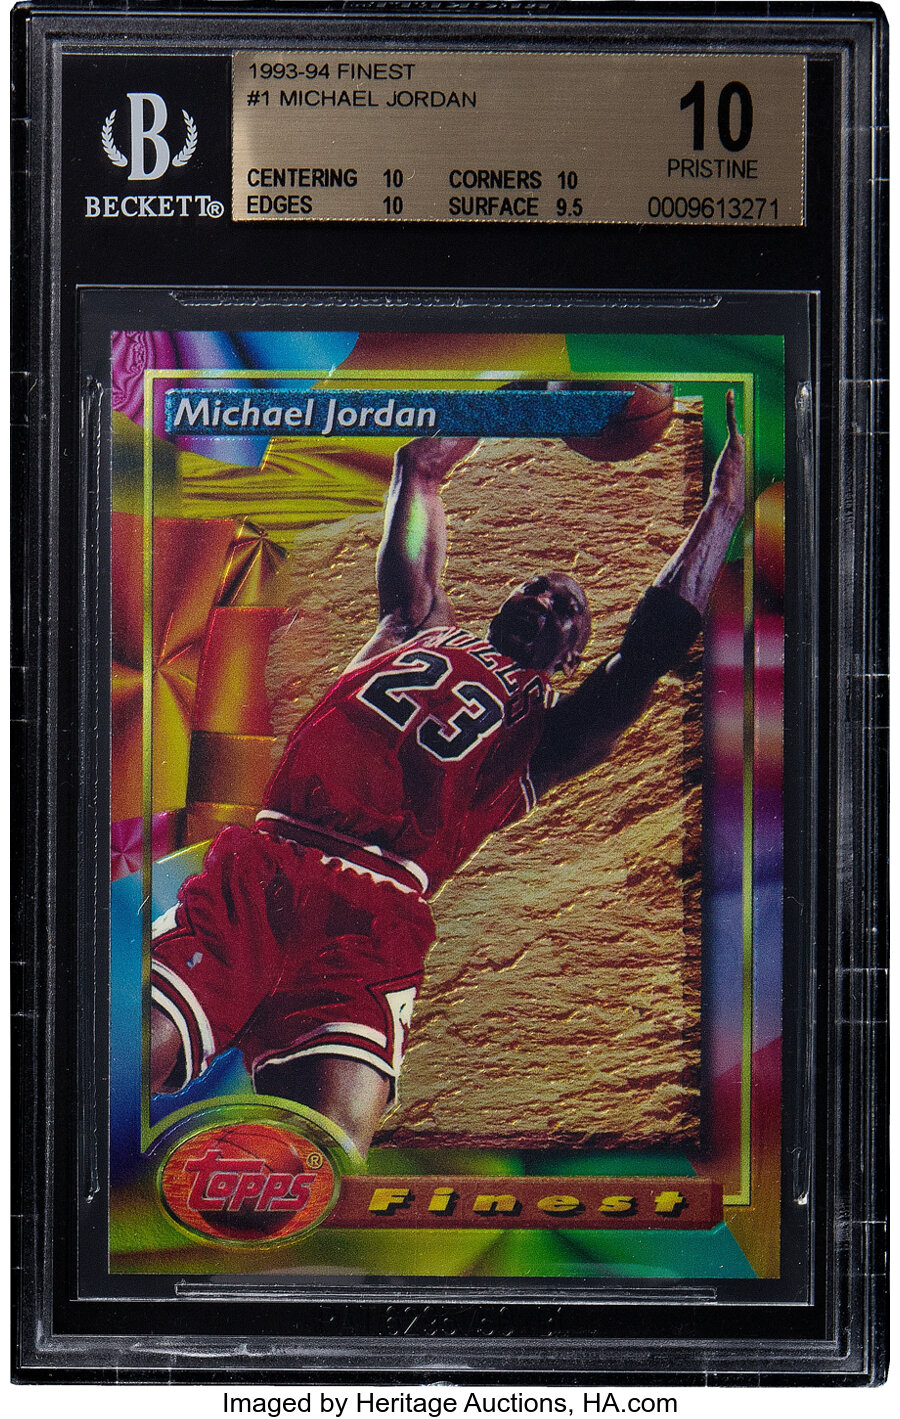 1993 Topps Finest Michael Jordan #1 BGS Pristine 10